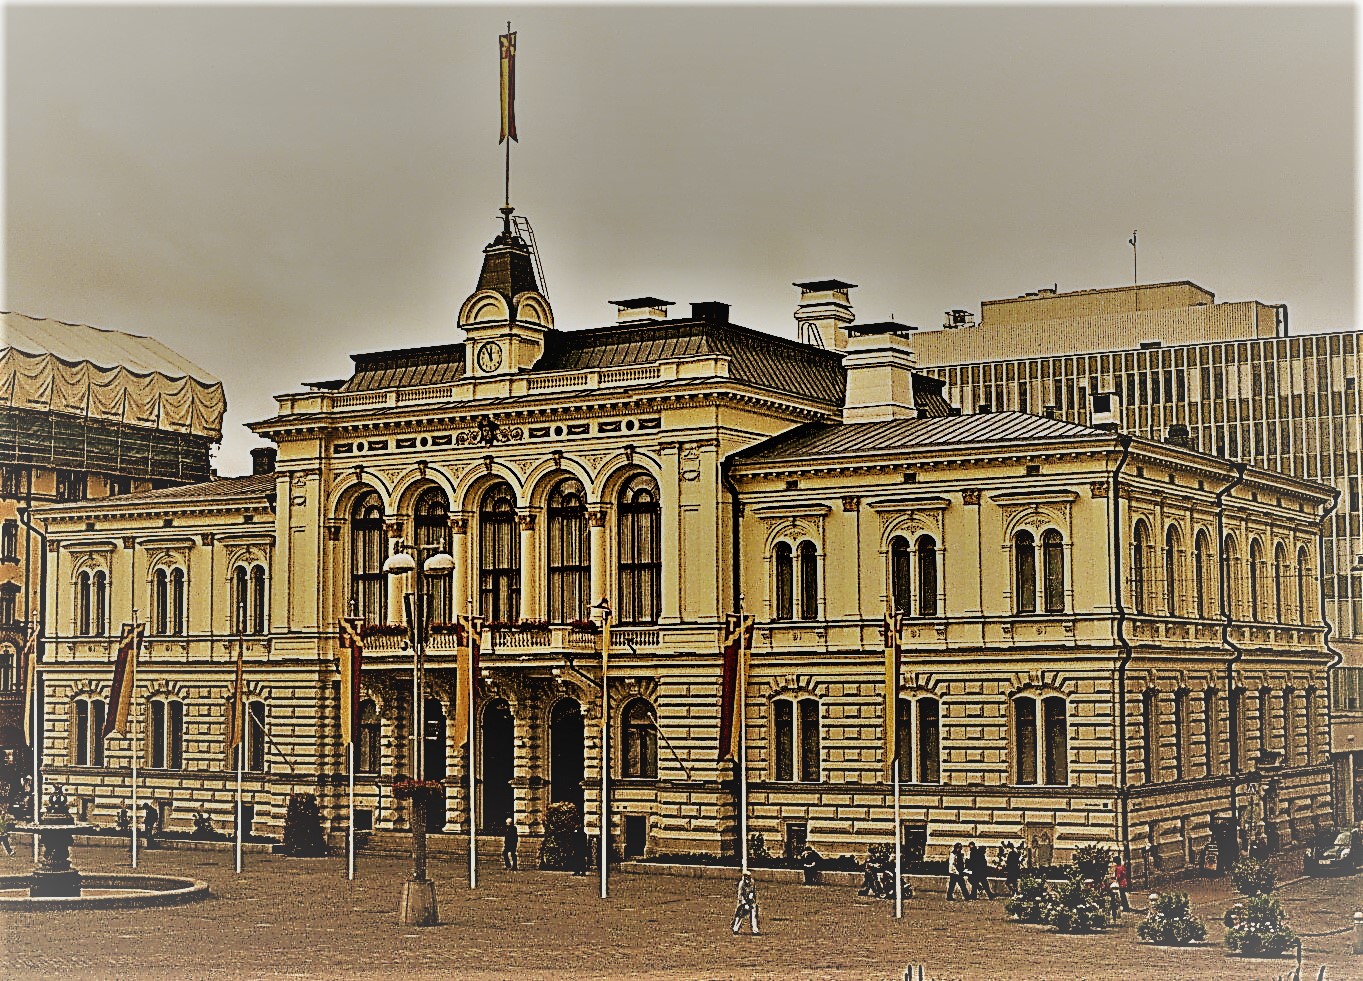 Tampere City Hall